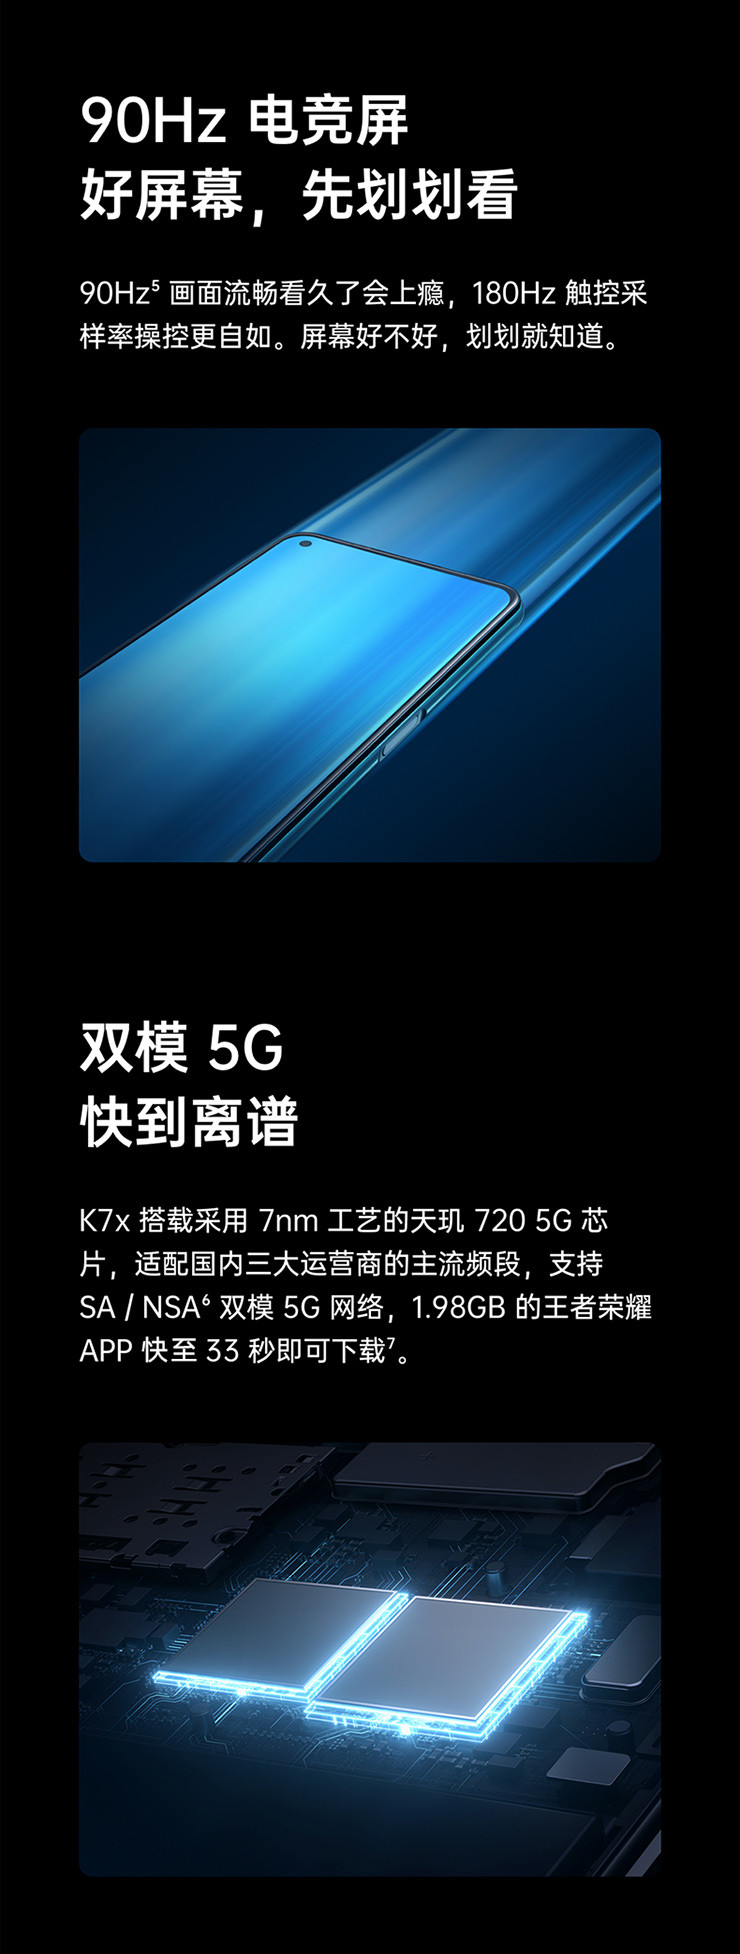 OPPO K7x新品 4800万超清四摄 5000mAh大电池 硬核5G手机